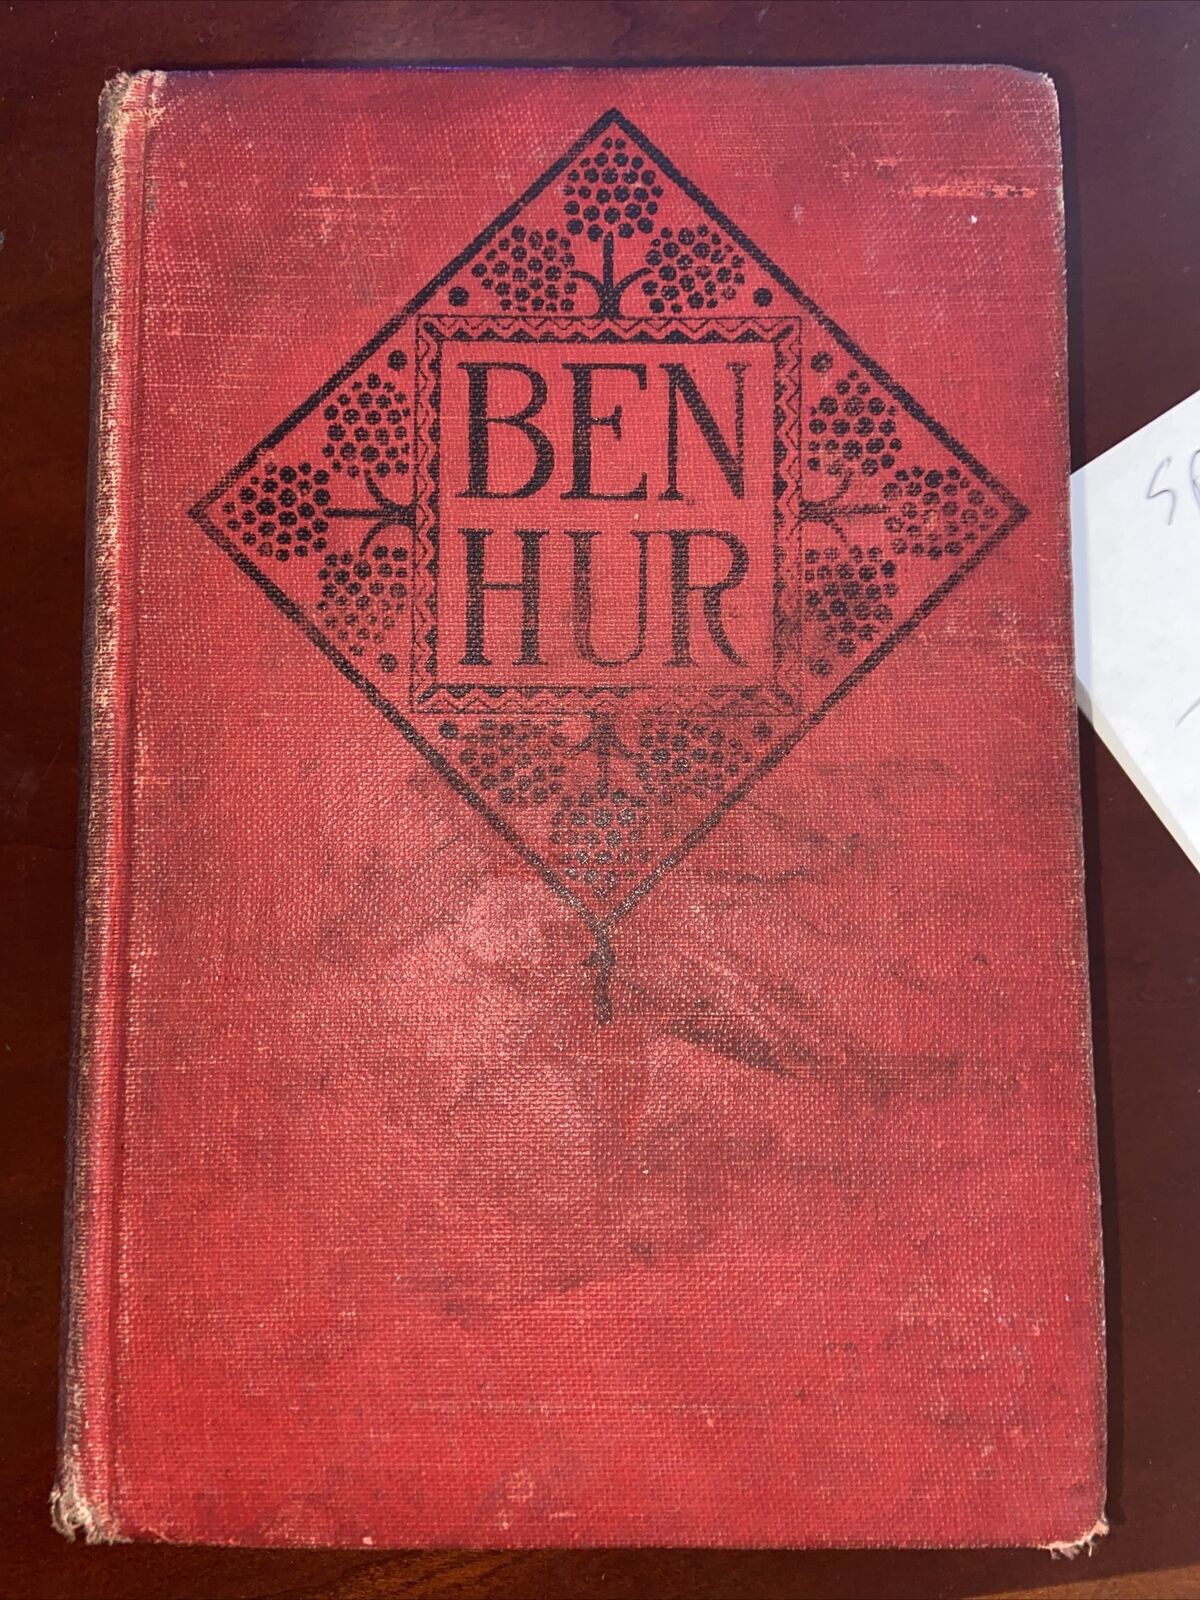 Ben Hur 1922 Vintage